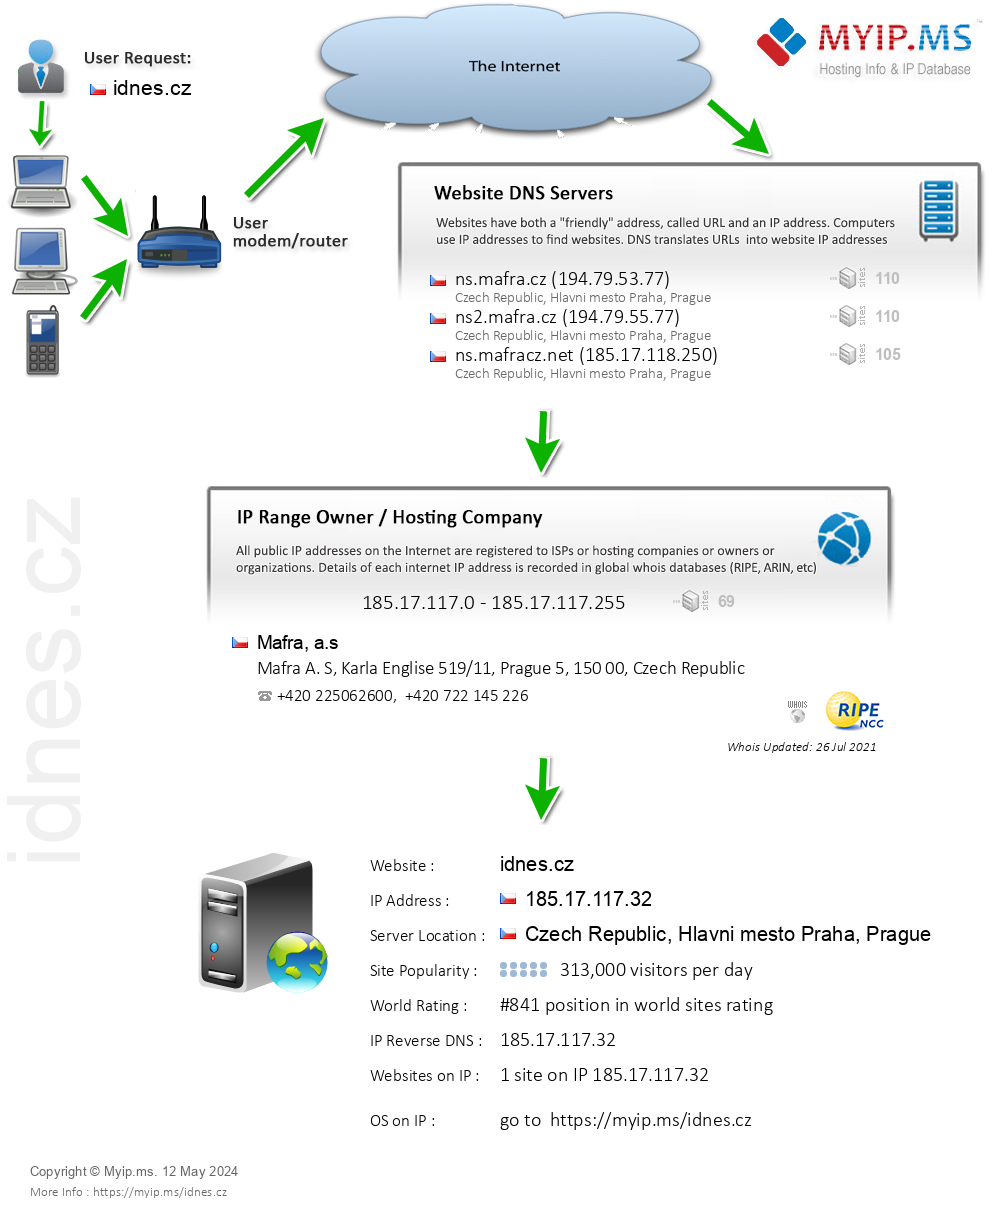 Idnes.cz - Website Hosting Visual IP Diagram